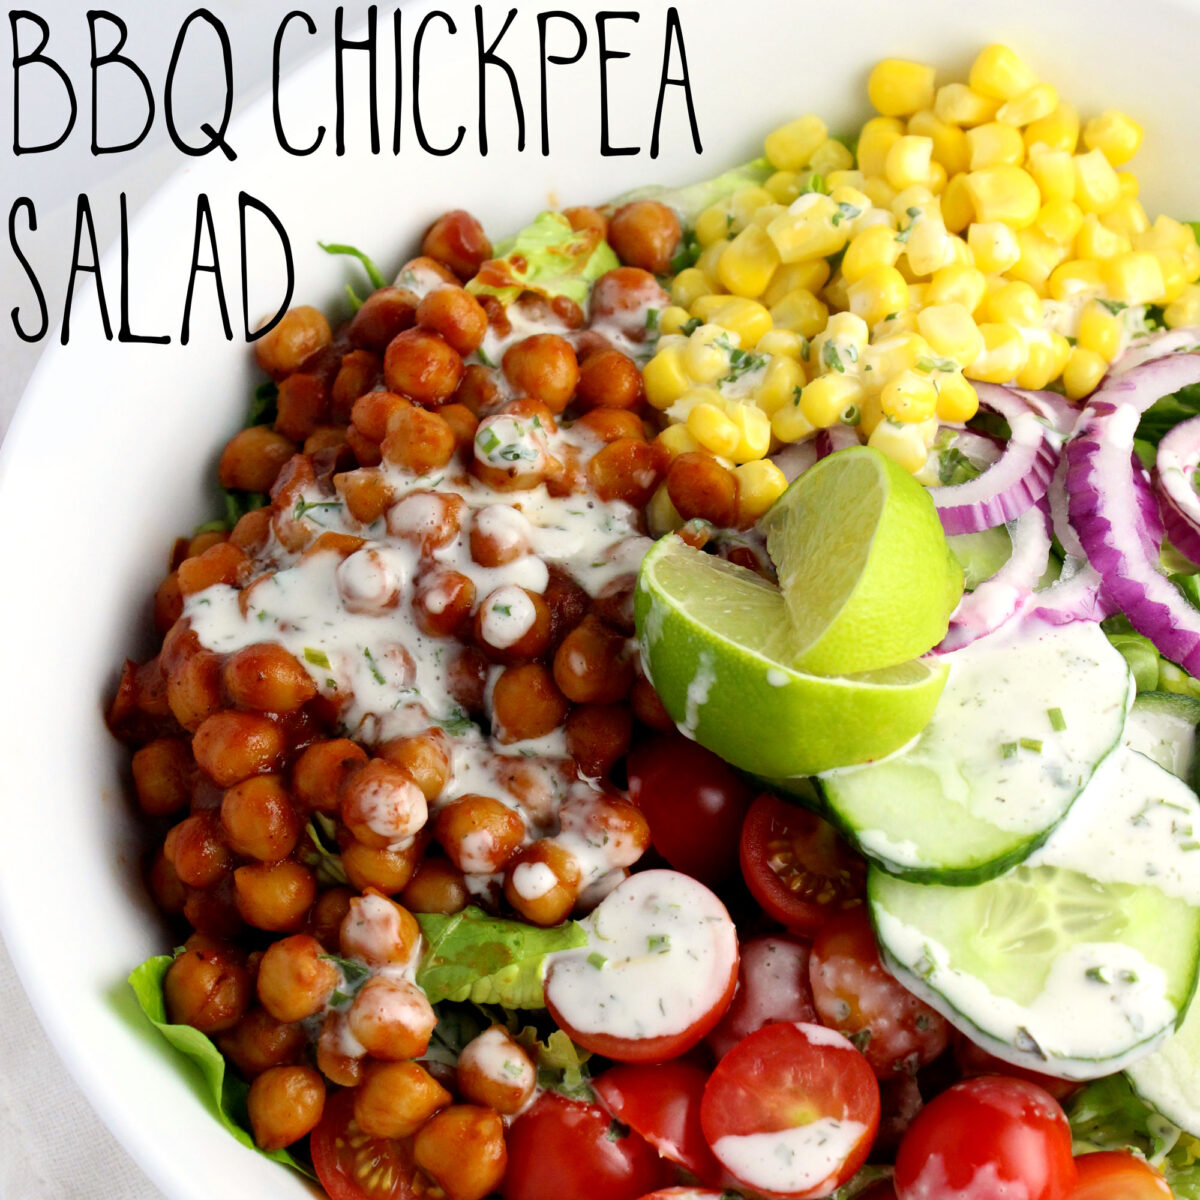 BBQ Chickpea Salad